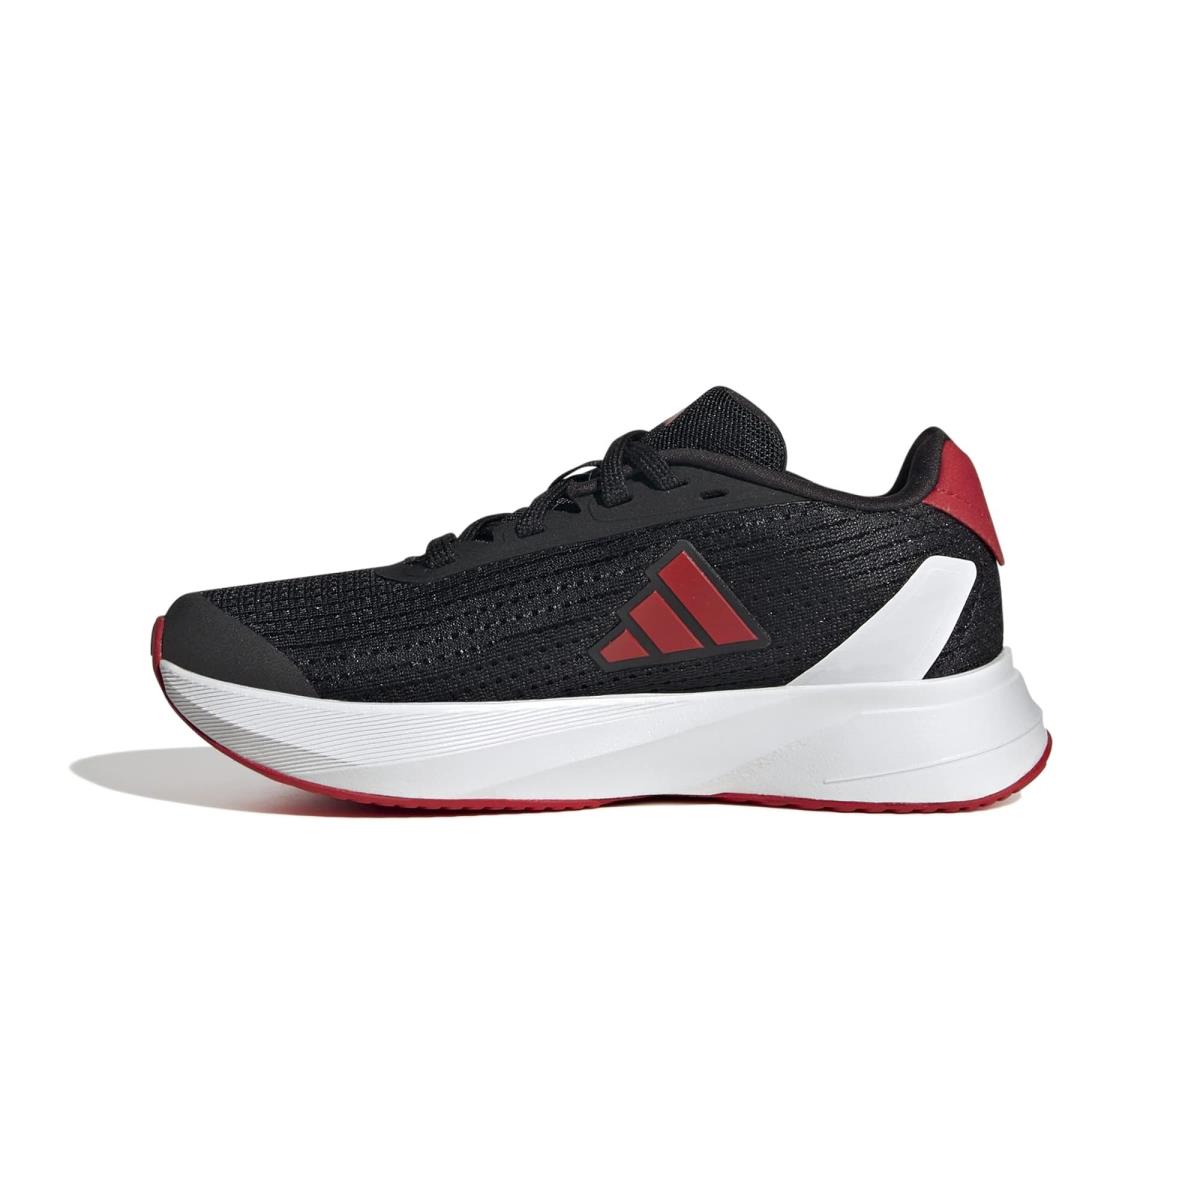 Adidas Unisex-child Duramo Sl Sneaker Core Black/Iron Metallic/Better Scarlet